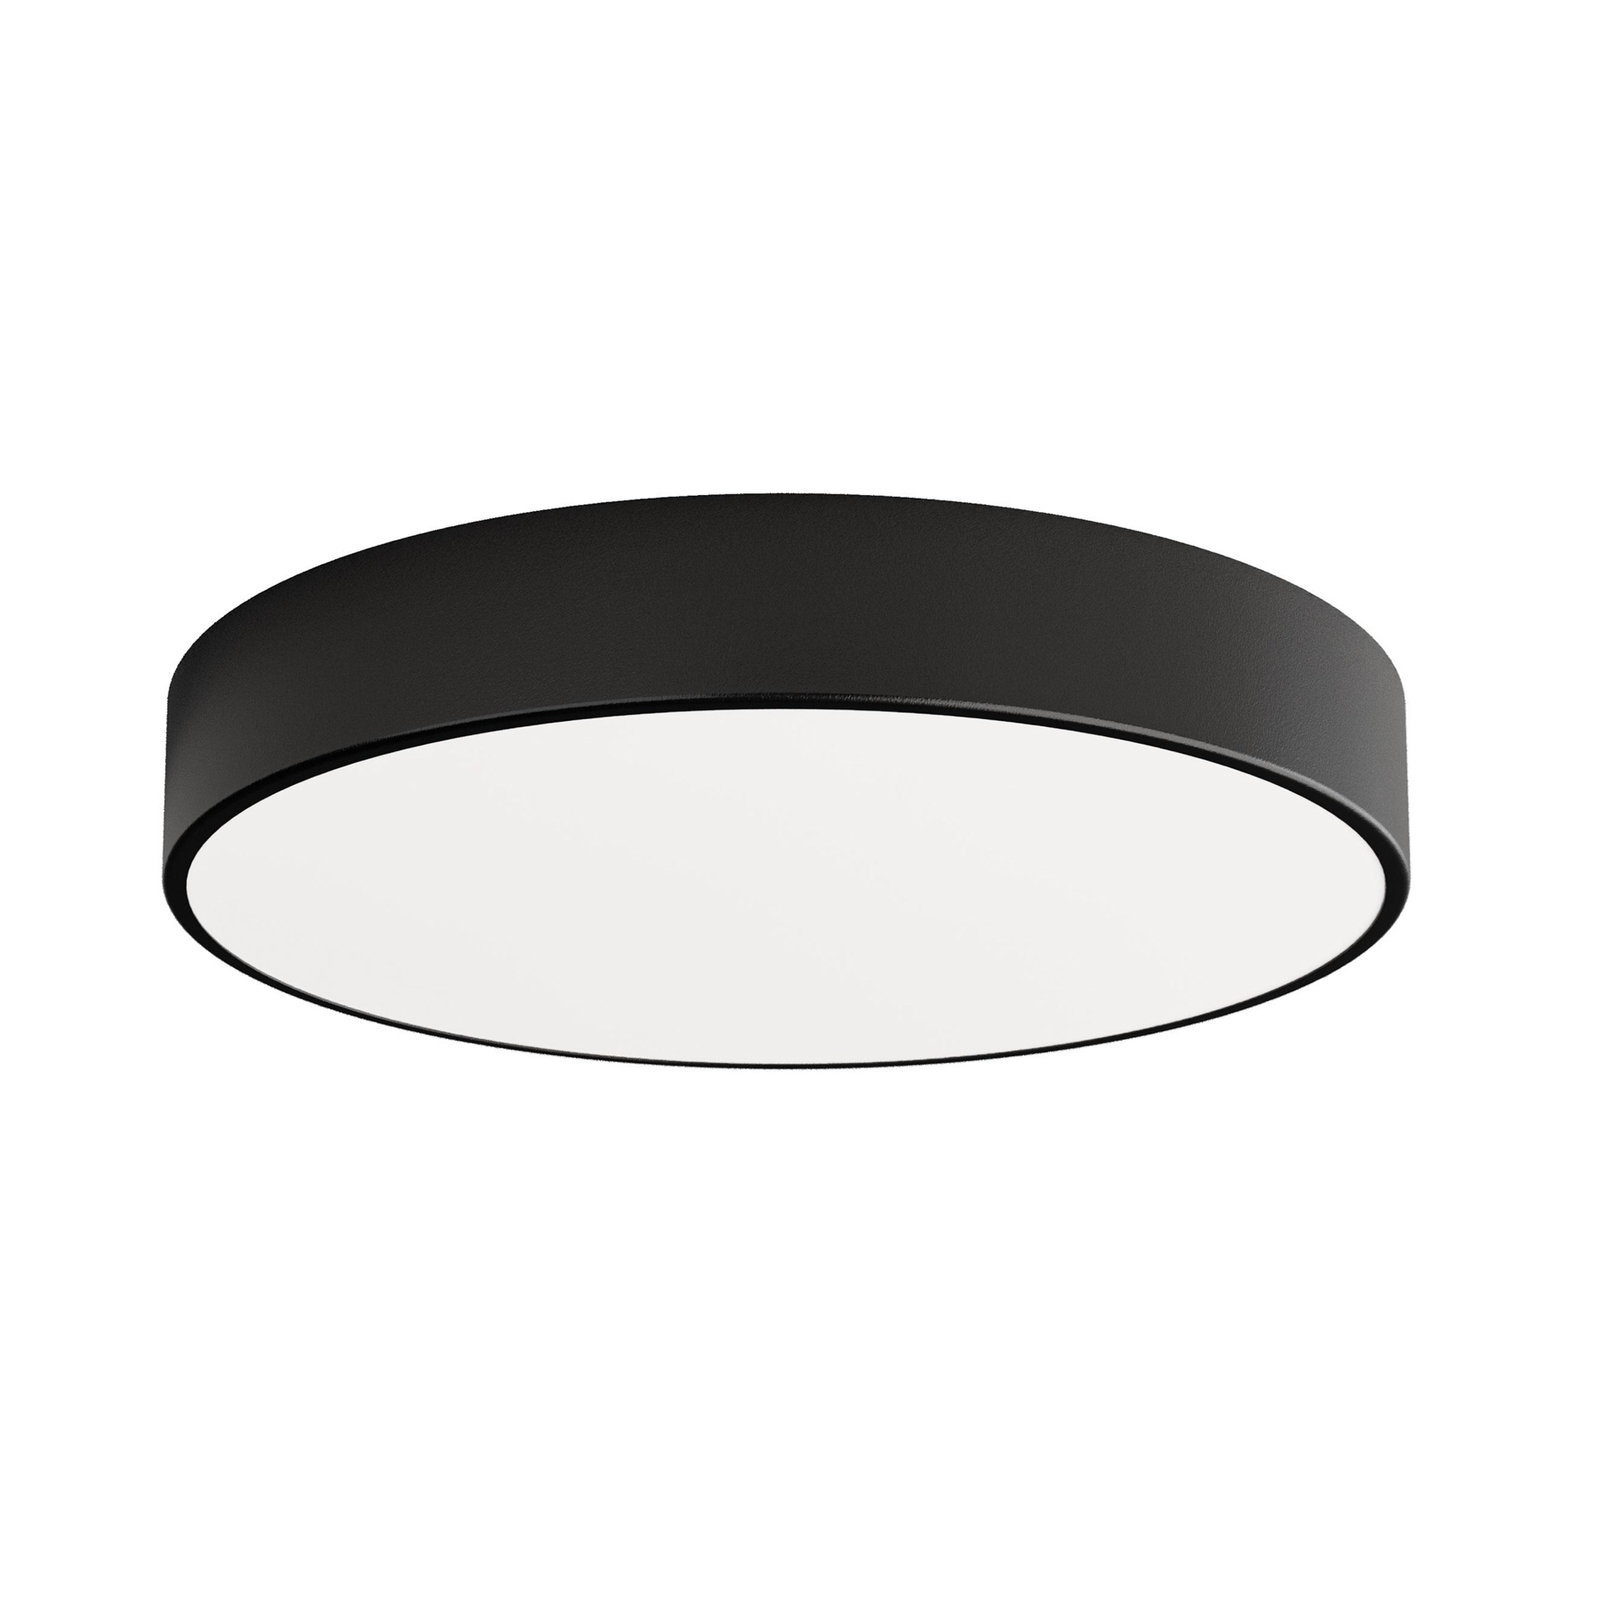 Lampa sufitowa Cleo, czarna, Ø 50 cm, metal, IP54